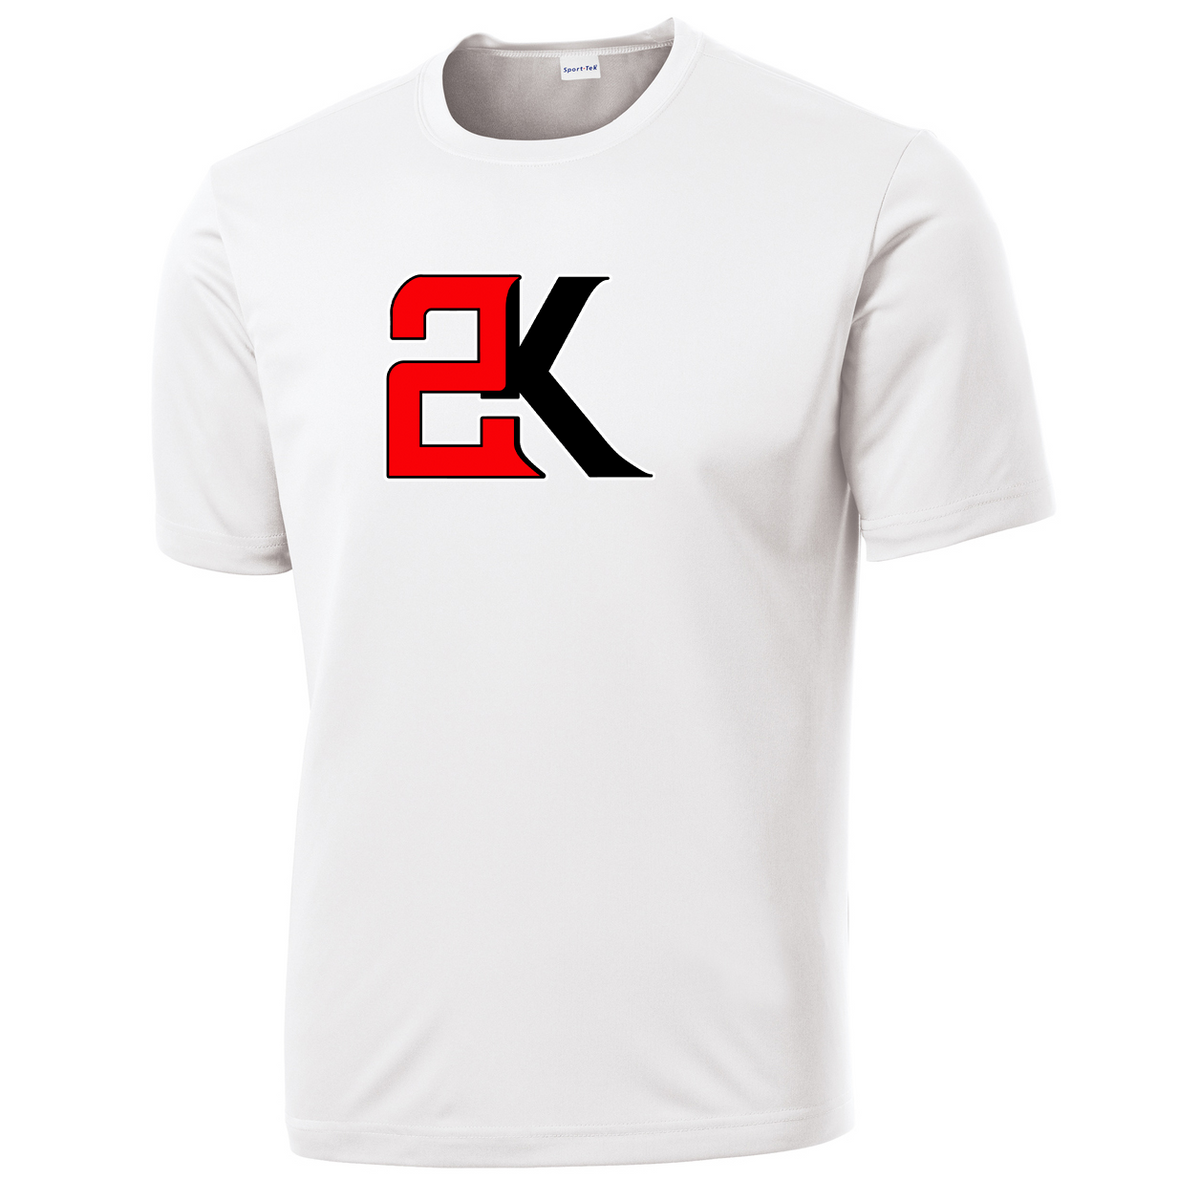 2K Softball Performance T-Shirt